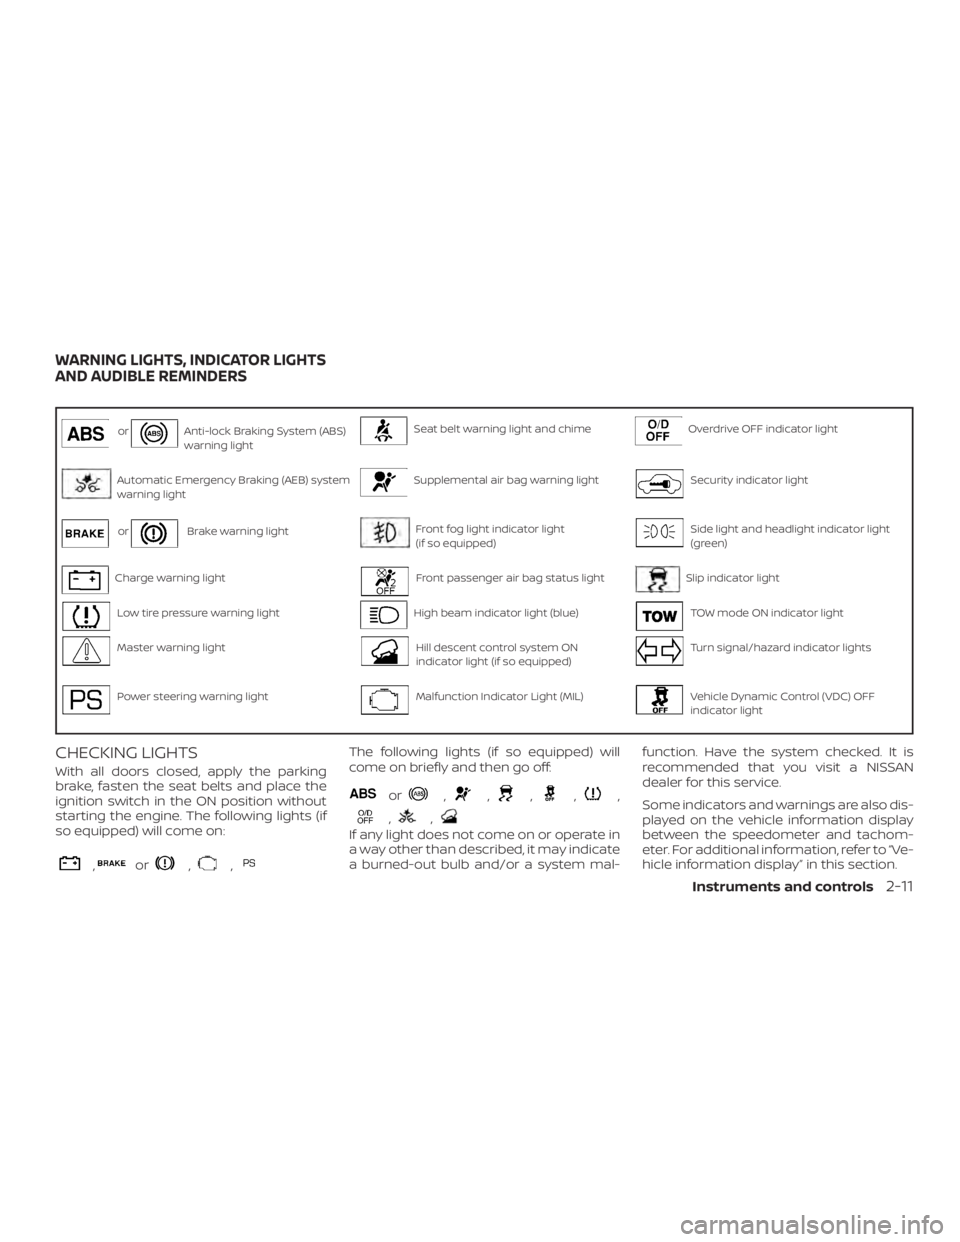 NISSAN PATHFINDER 2020  Owner´s Manual orAnti-lock Braking System (ABS)
warning lightSeat belt warning light and chimeOverdrive OFF indicator light
Automatic Emergency Braking (AEB) system
warning lightSupplemental air bag warning lightSec